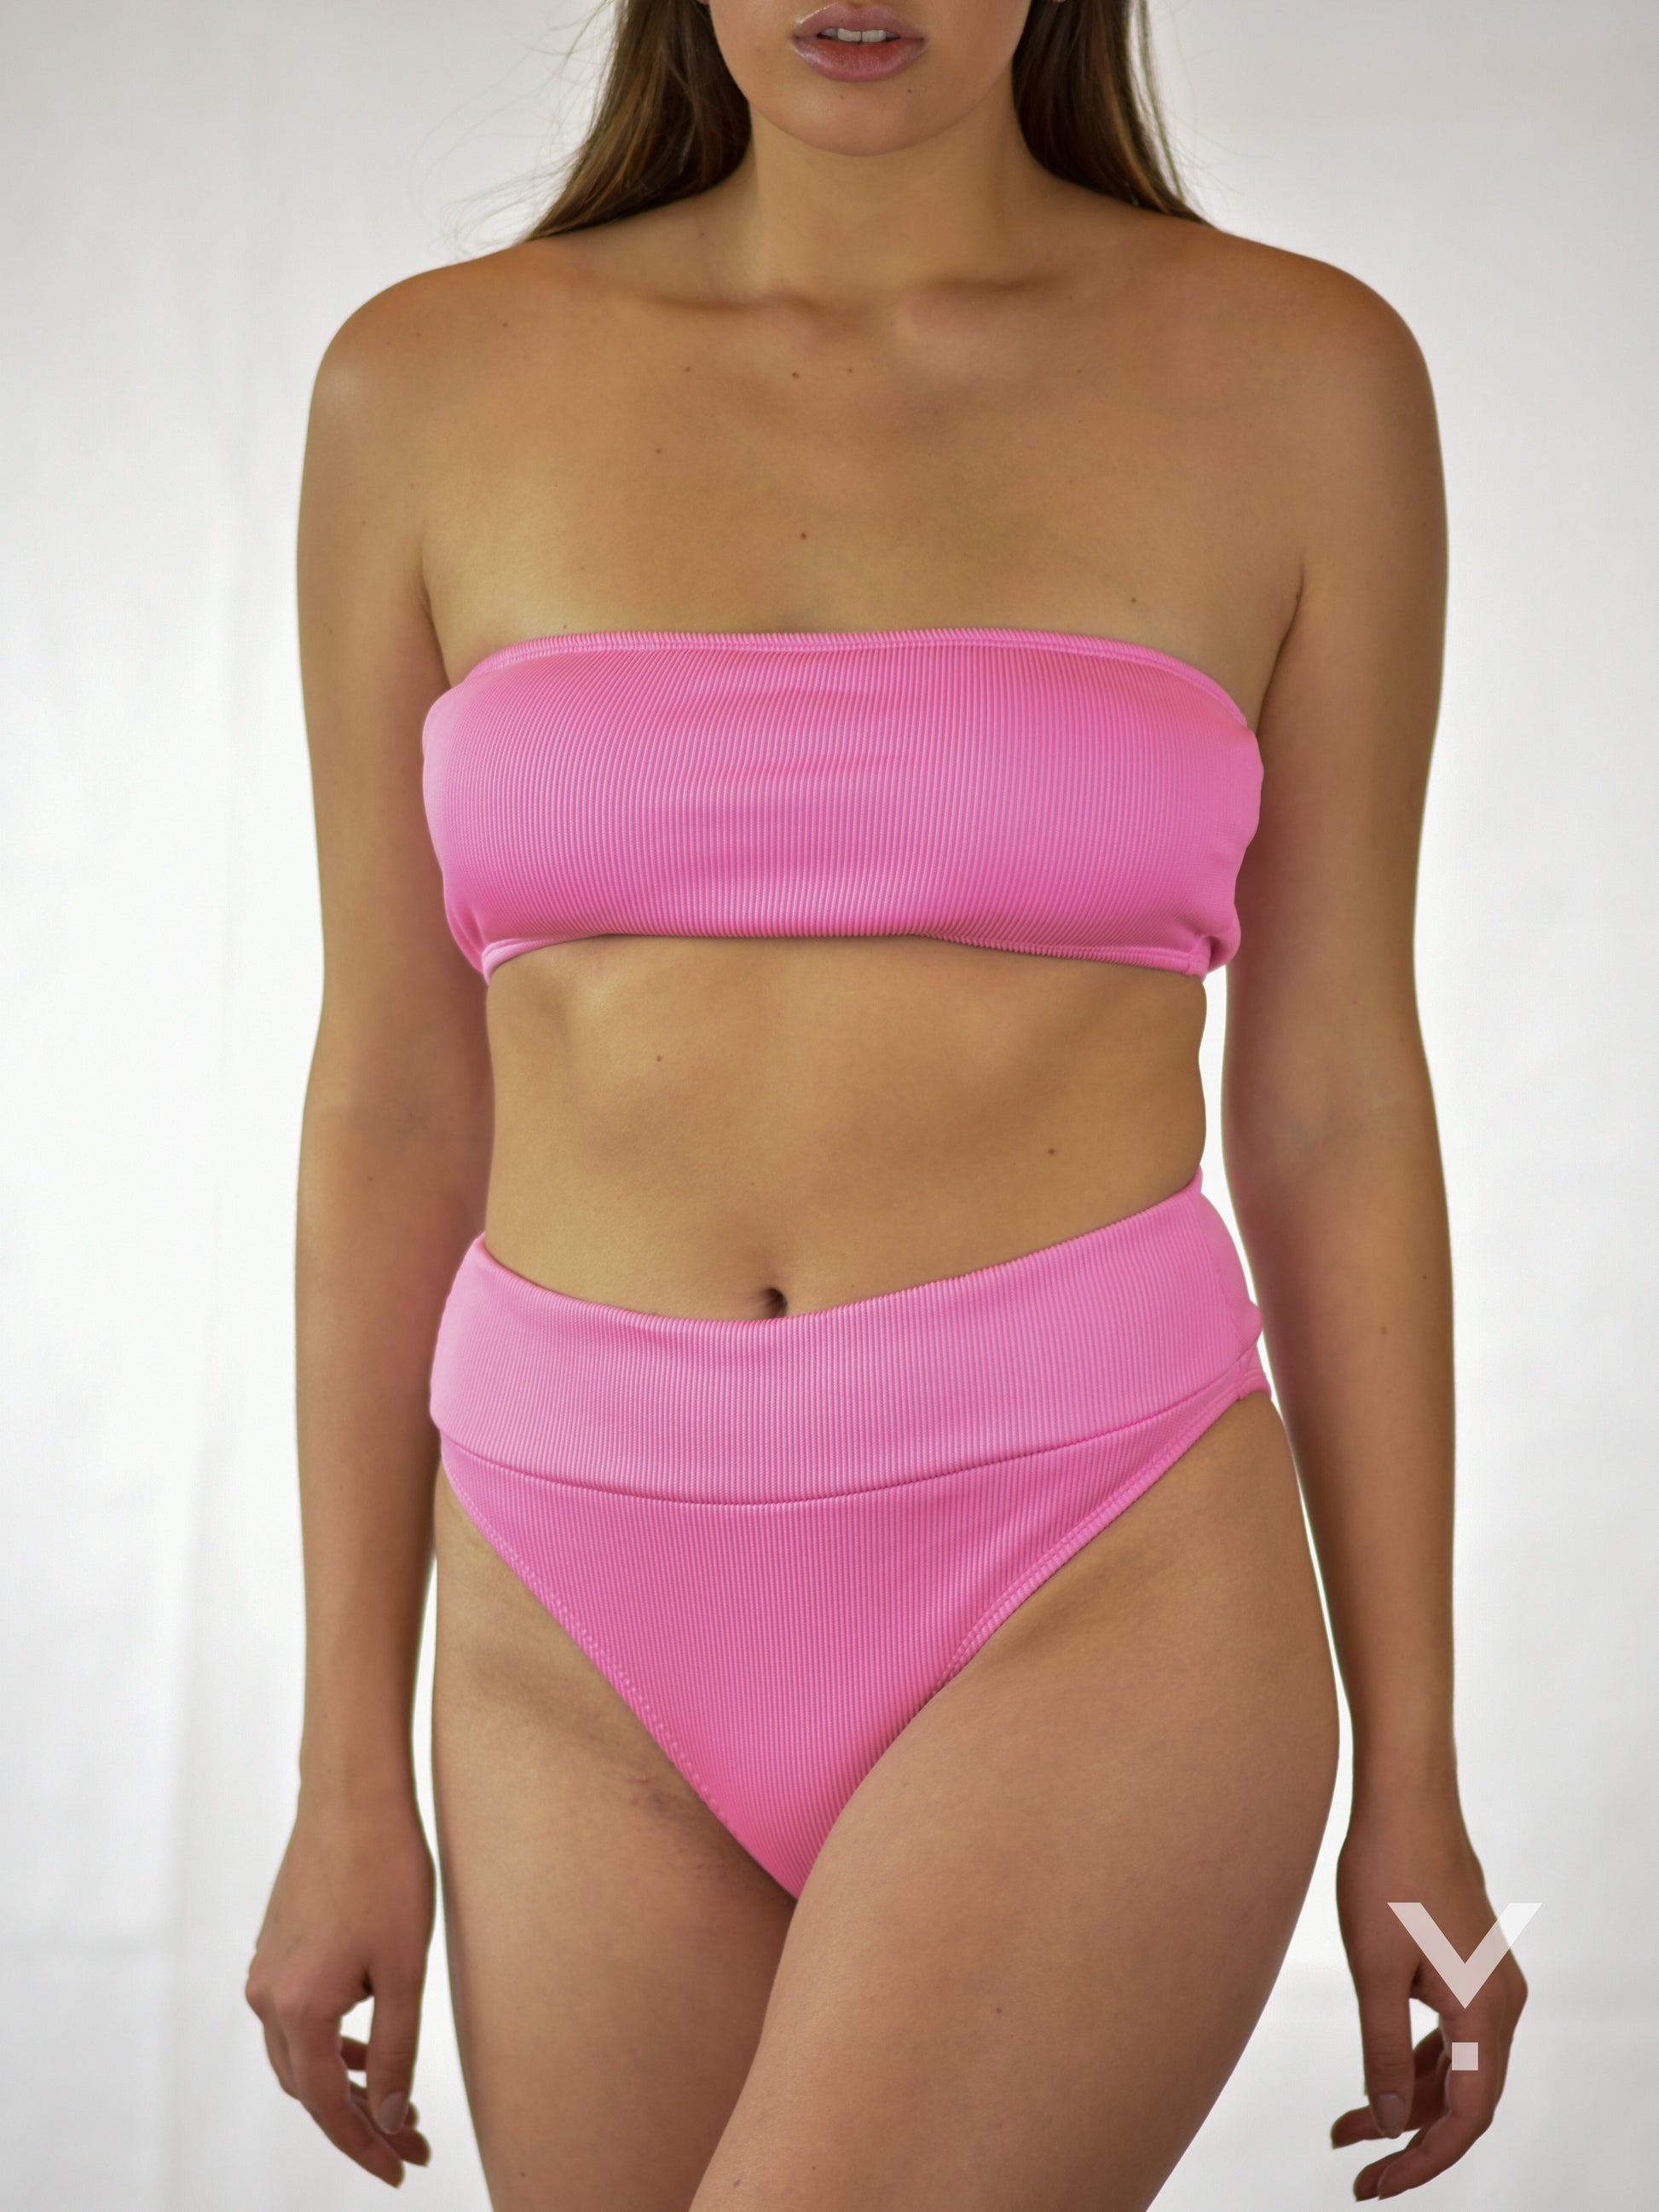 Wipeout Bikini Bottoms Pink - Bikini bottom | AVAYOS